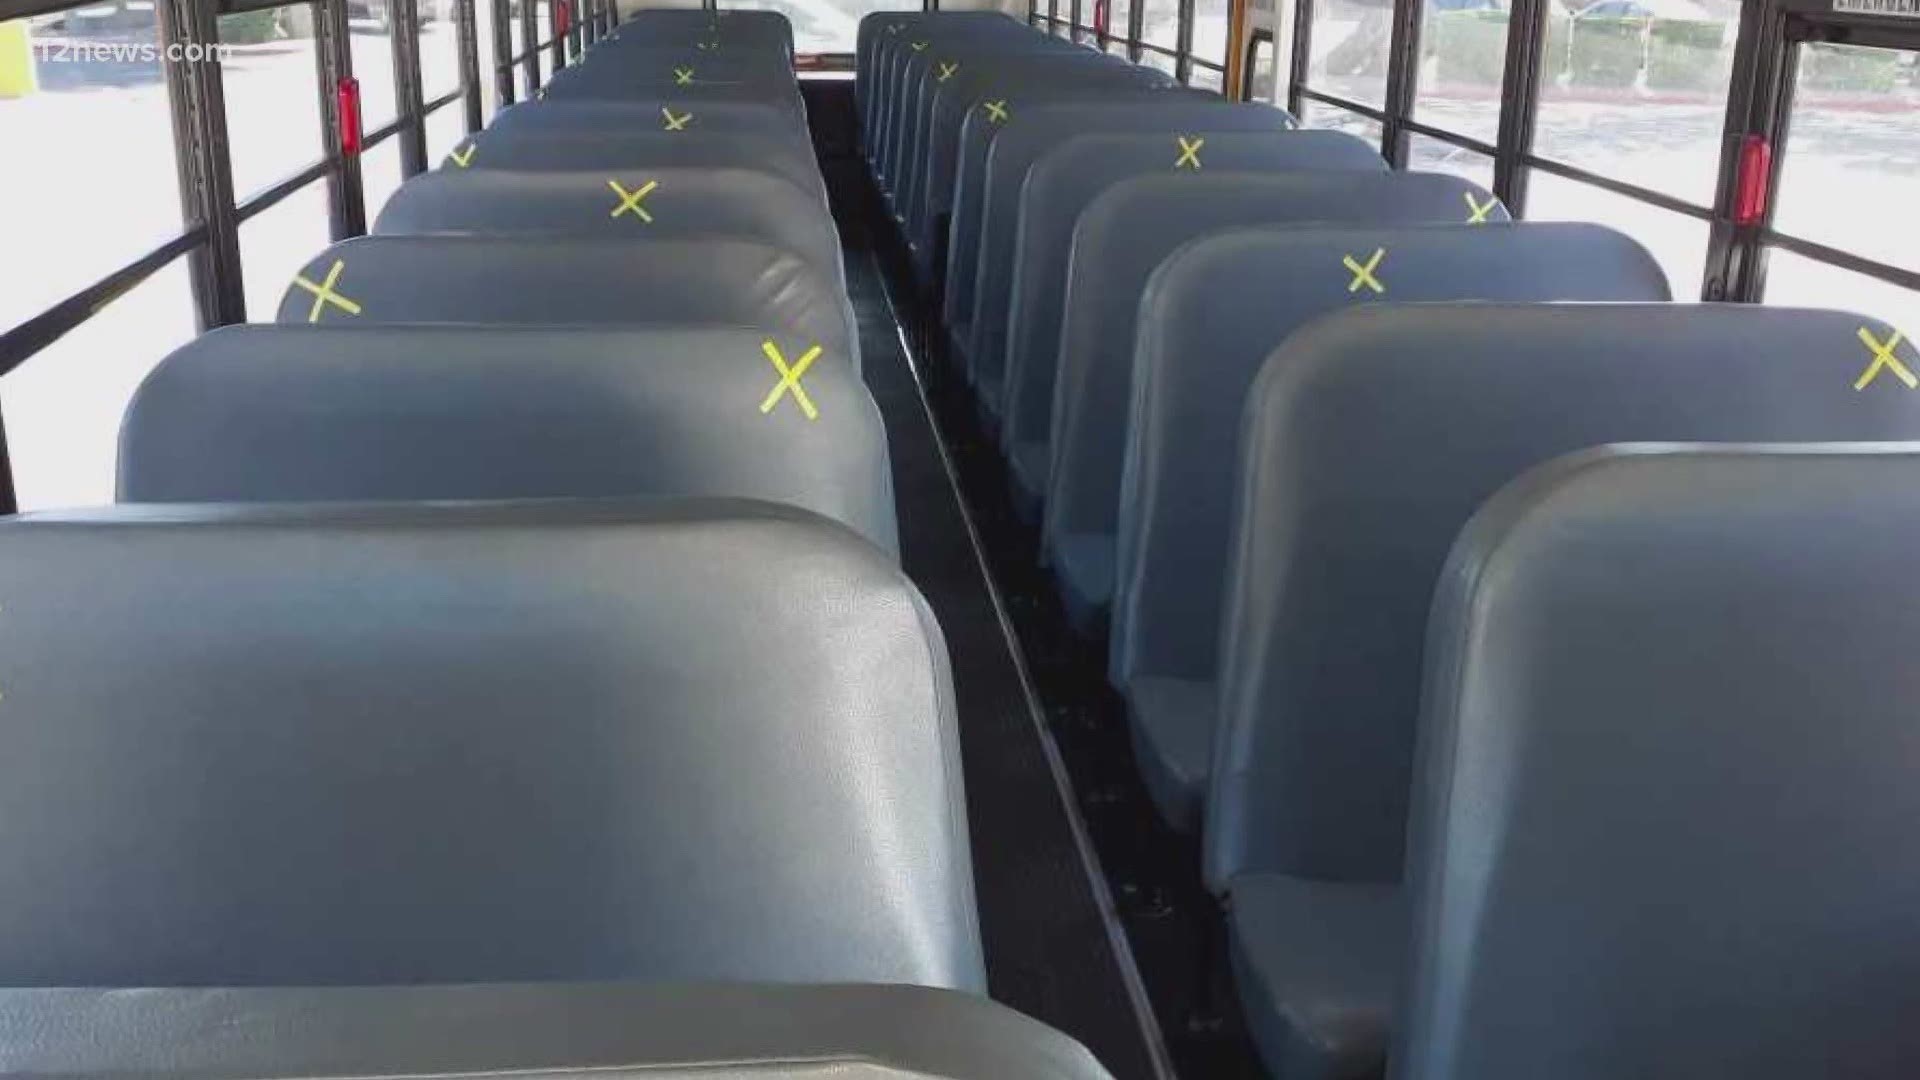 School Bus X Video - Cartwright district creates school bus safety plan amid COVID-19 crisis |  12news.com